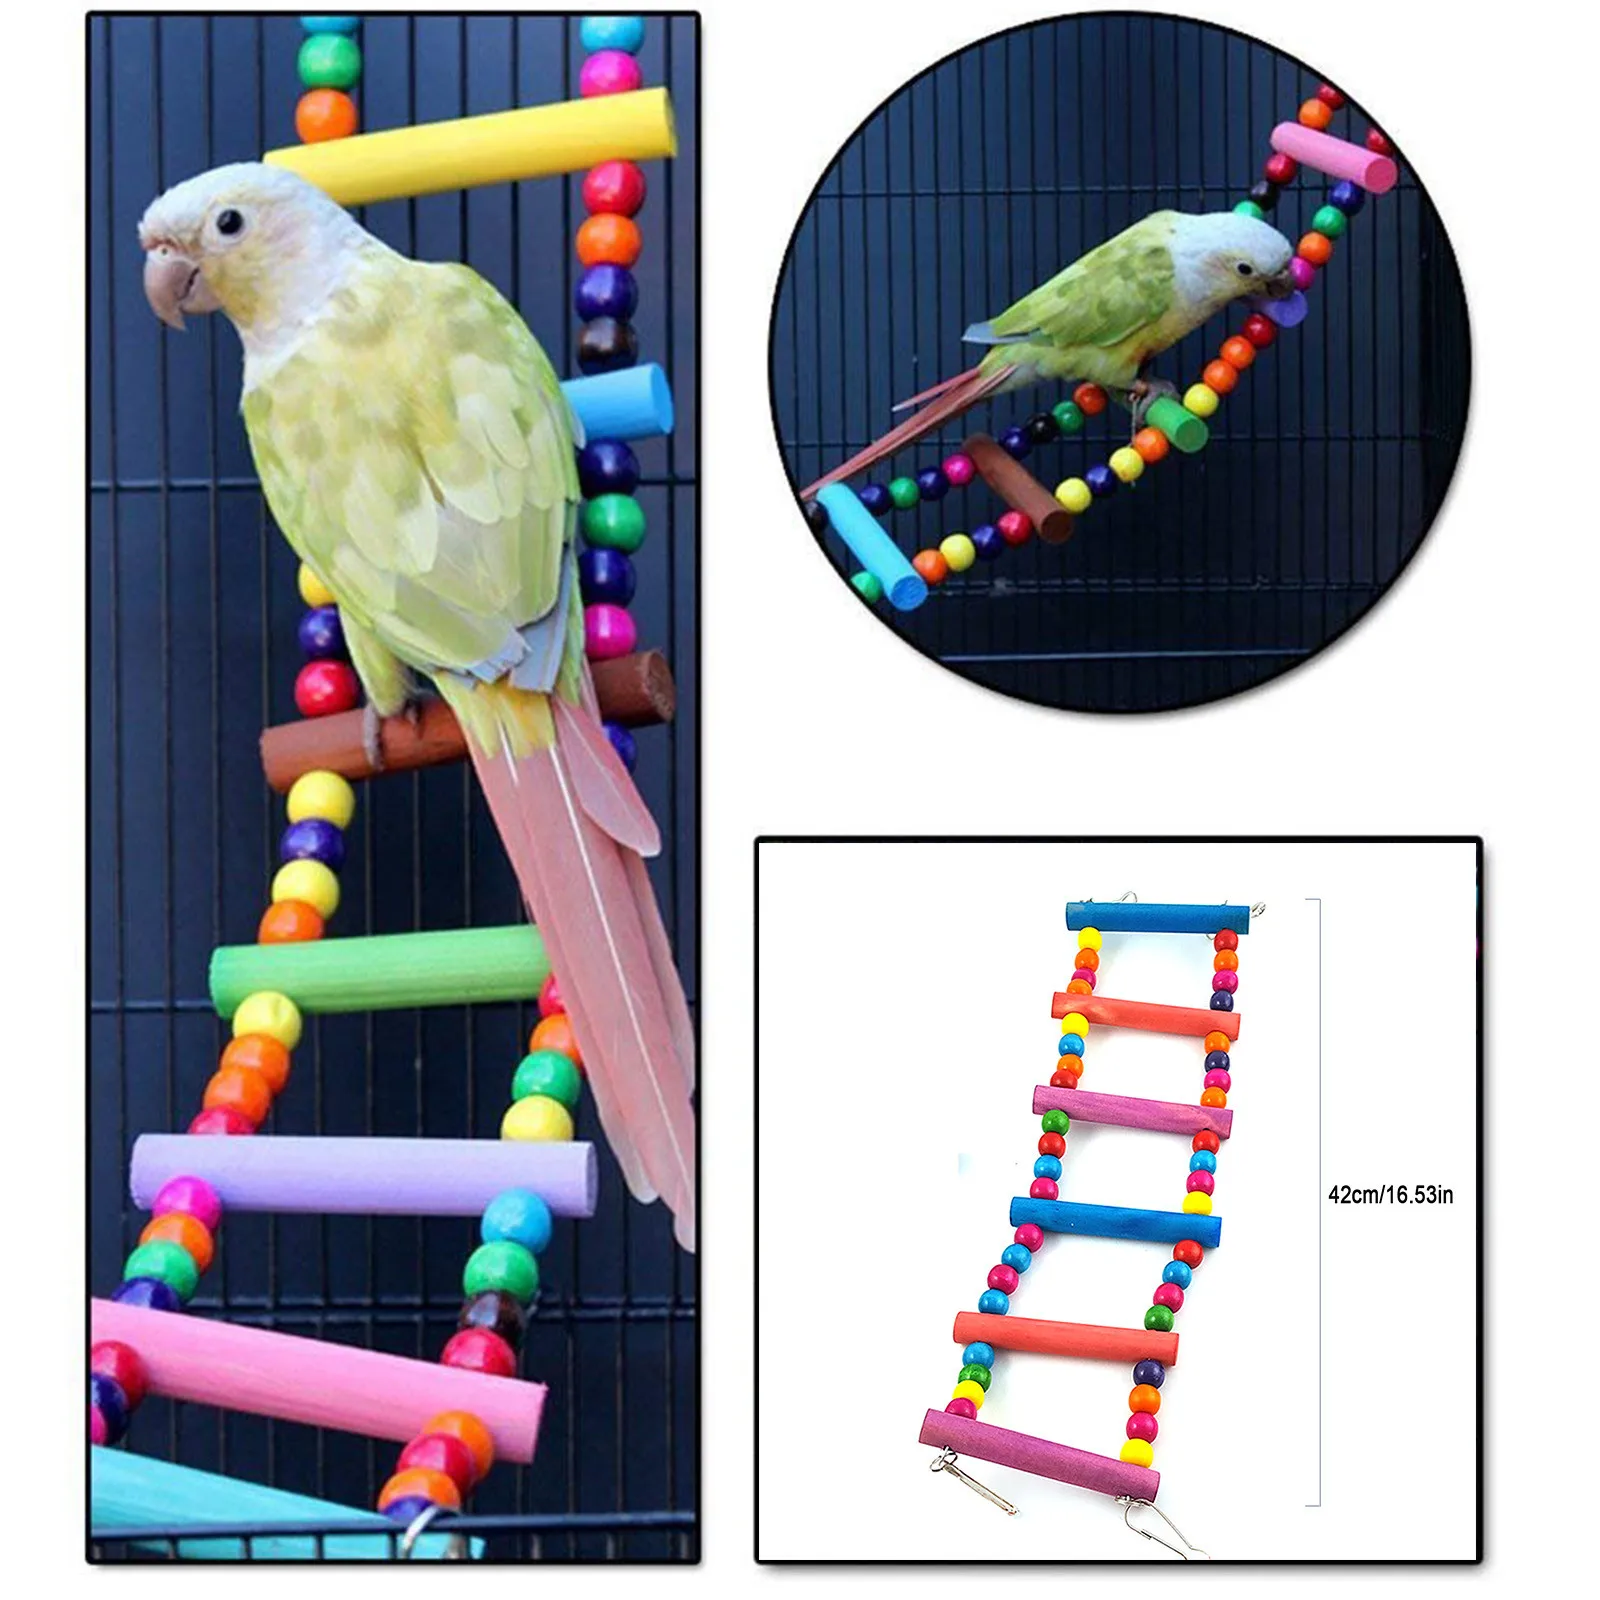 

Birds Pets Bird Supplies Hanging Colorful Balls Climbing Toy 1 Pcs Parrots Ladders With Natural Wood Bird Toys